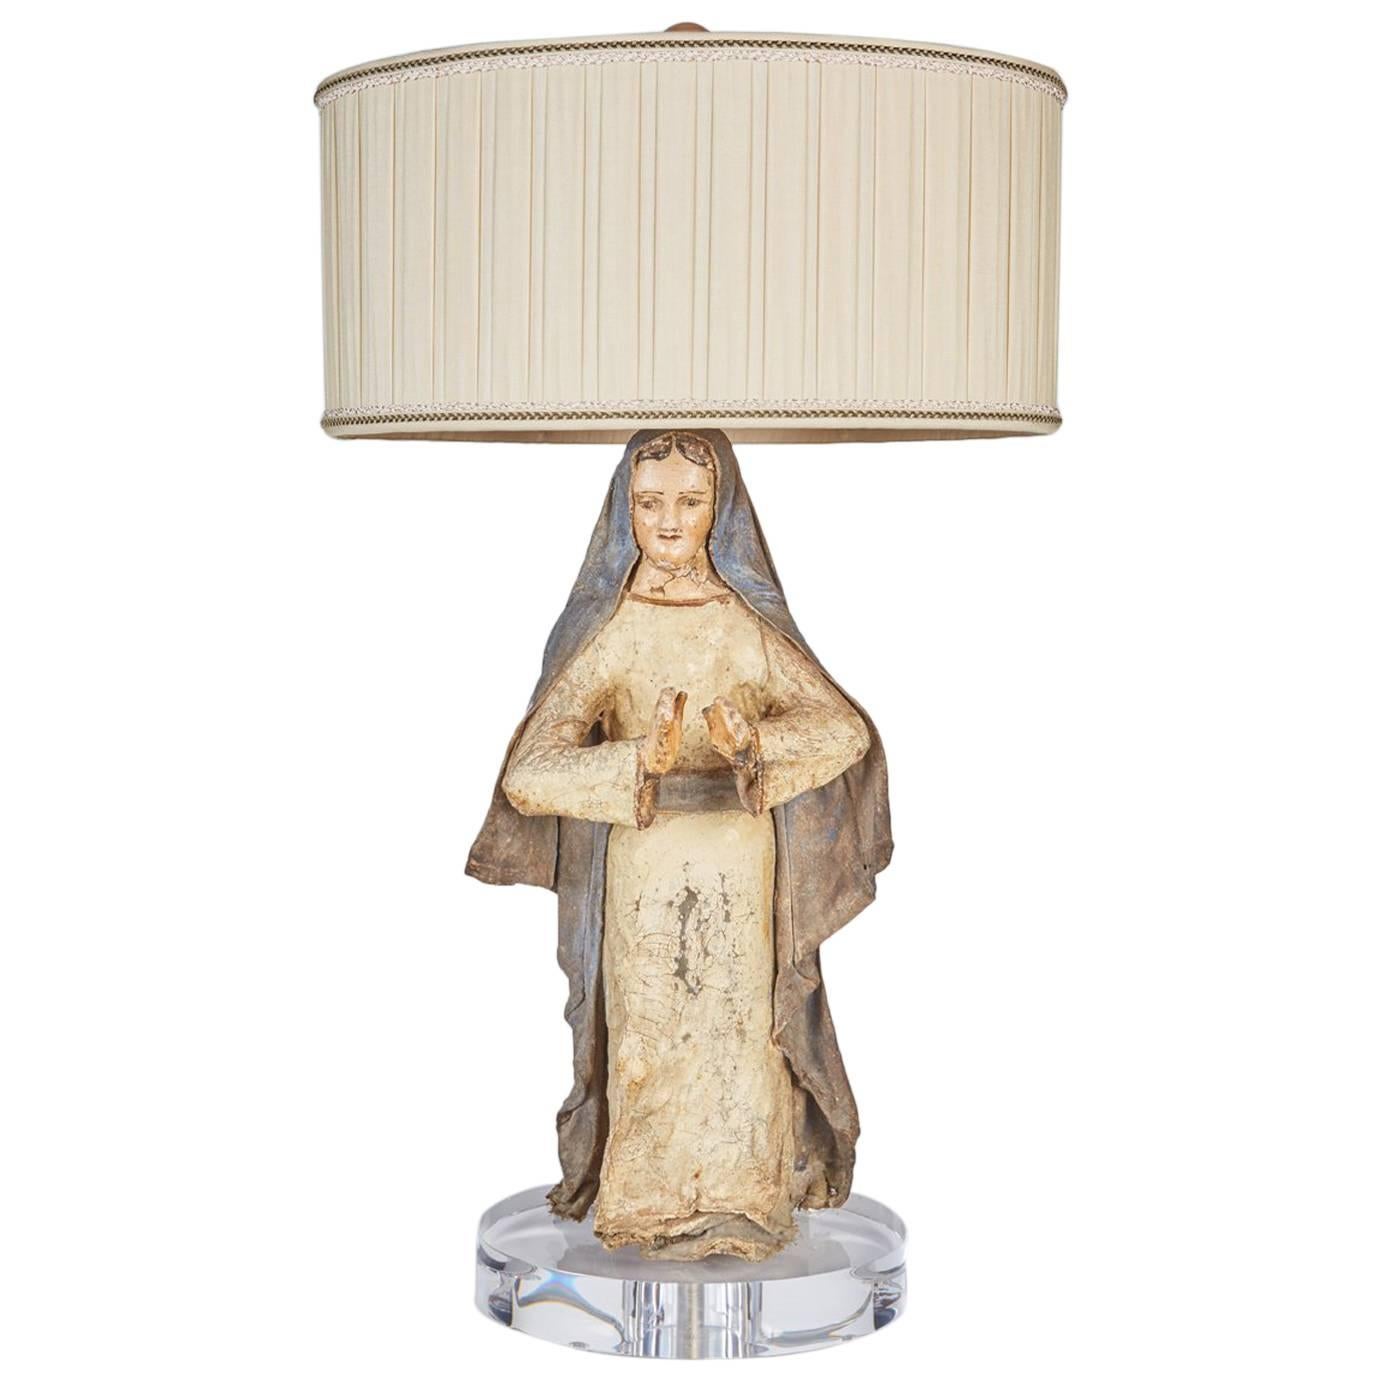 Antique Papier Mâché Creche Figure of the Madonna Now Custom Mounted as a Lamp